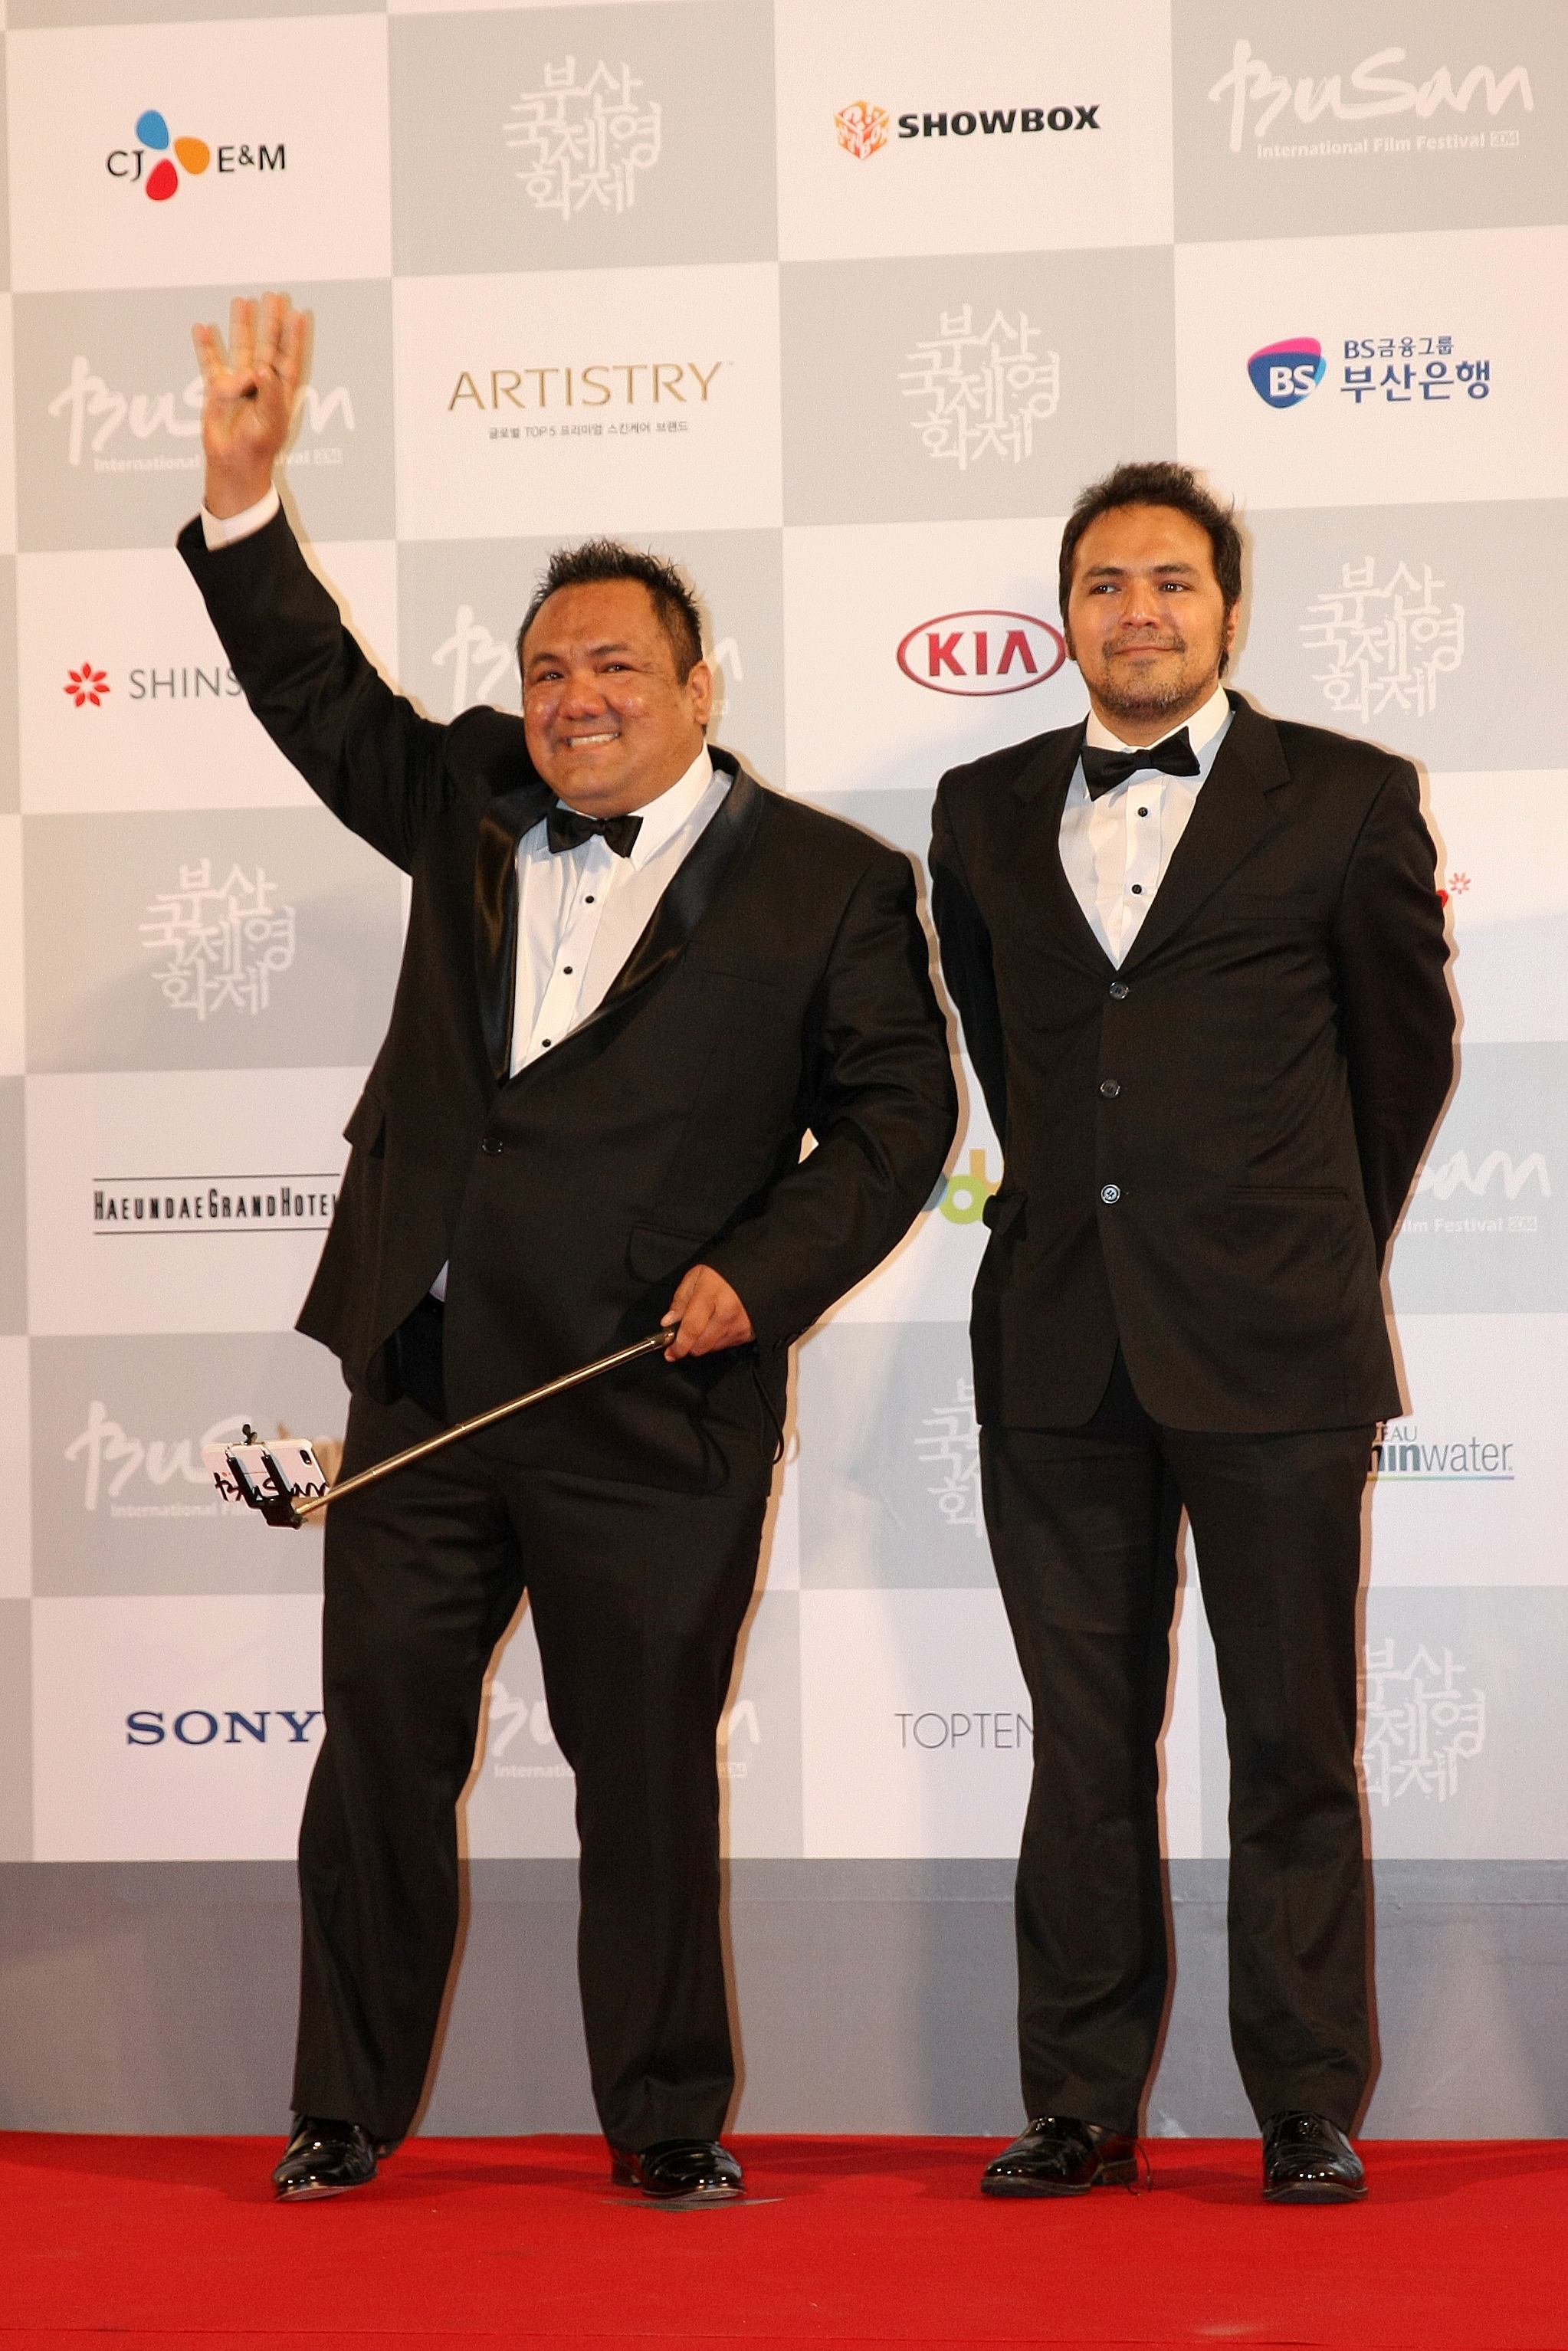 Producer Meackol Ciurlizza and writer/director Carlos Ciurlizza at the world premiere of SEBASTIAN at the 2014 Busan International Film Festival - South Korea.